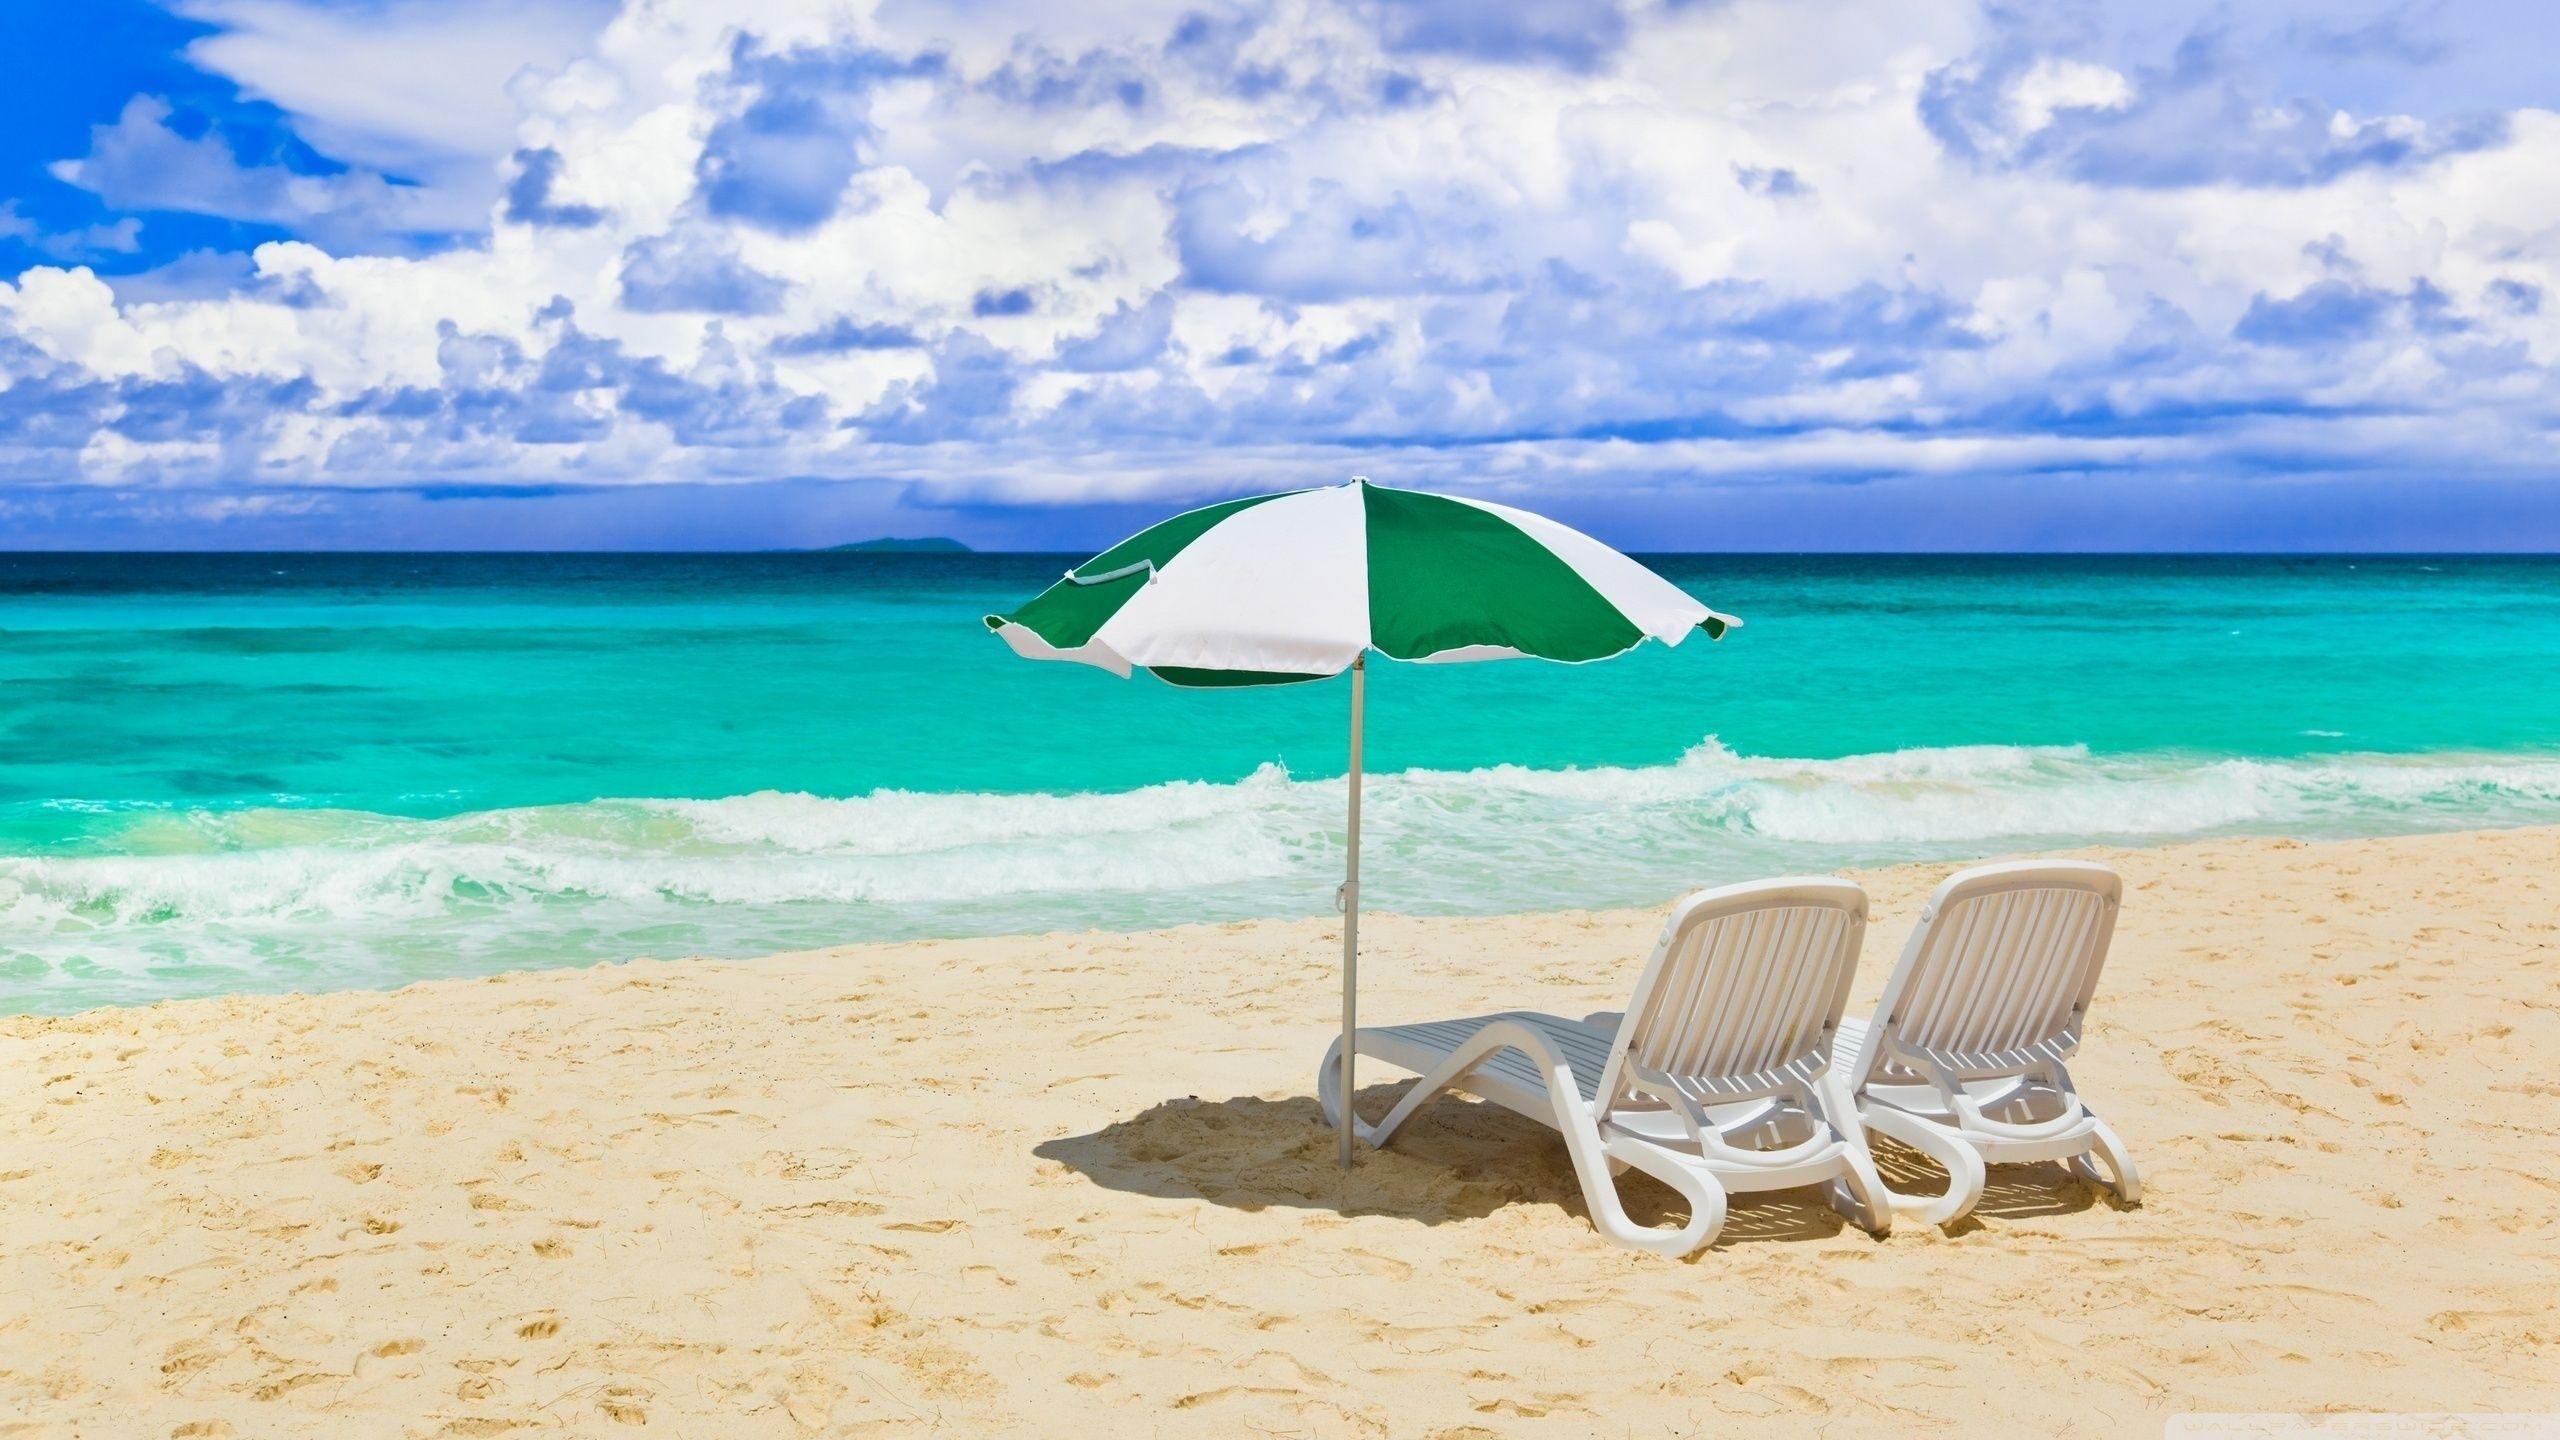 Sunny Day At The Beach ❤ 4K HD Desktop Wallpaper for 4K Ultra HD TV